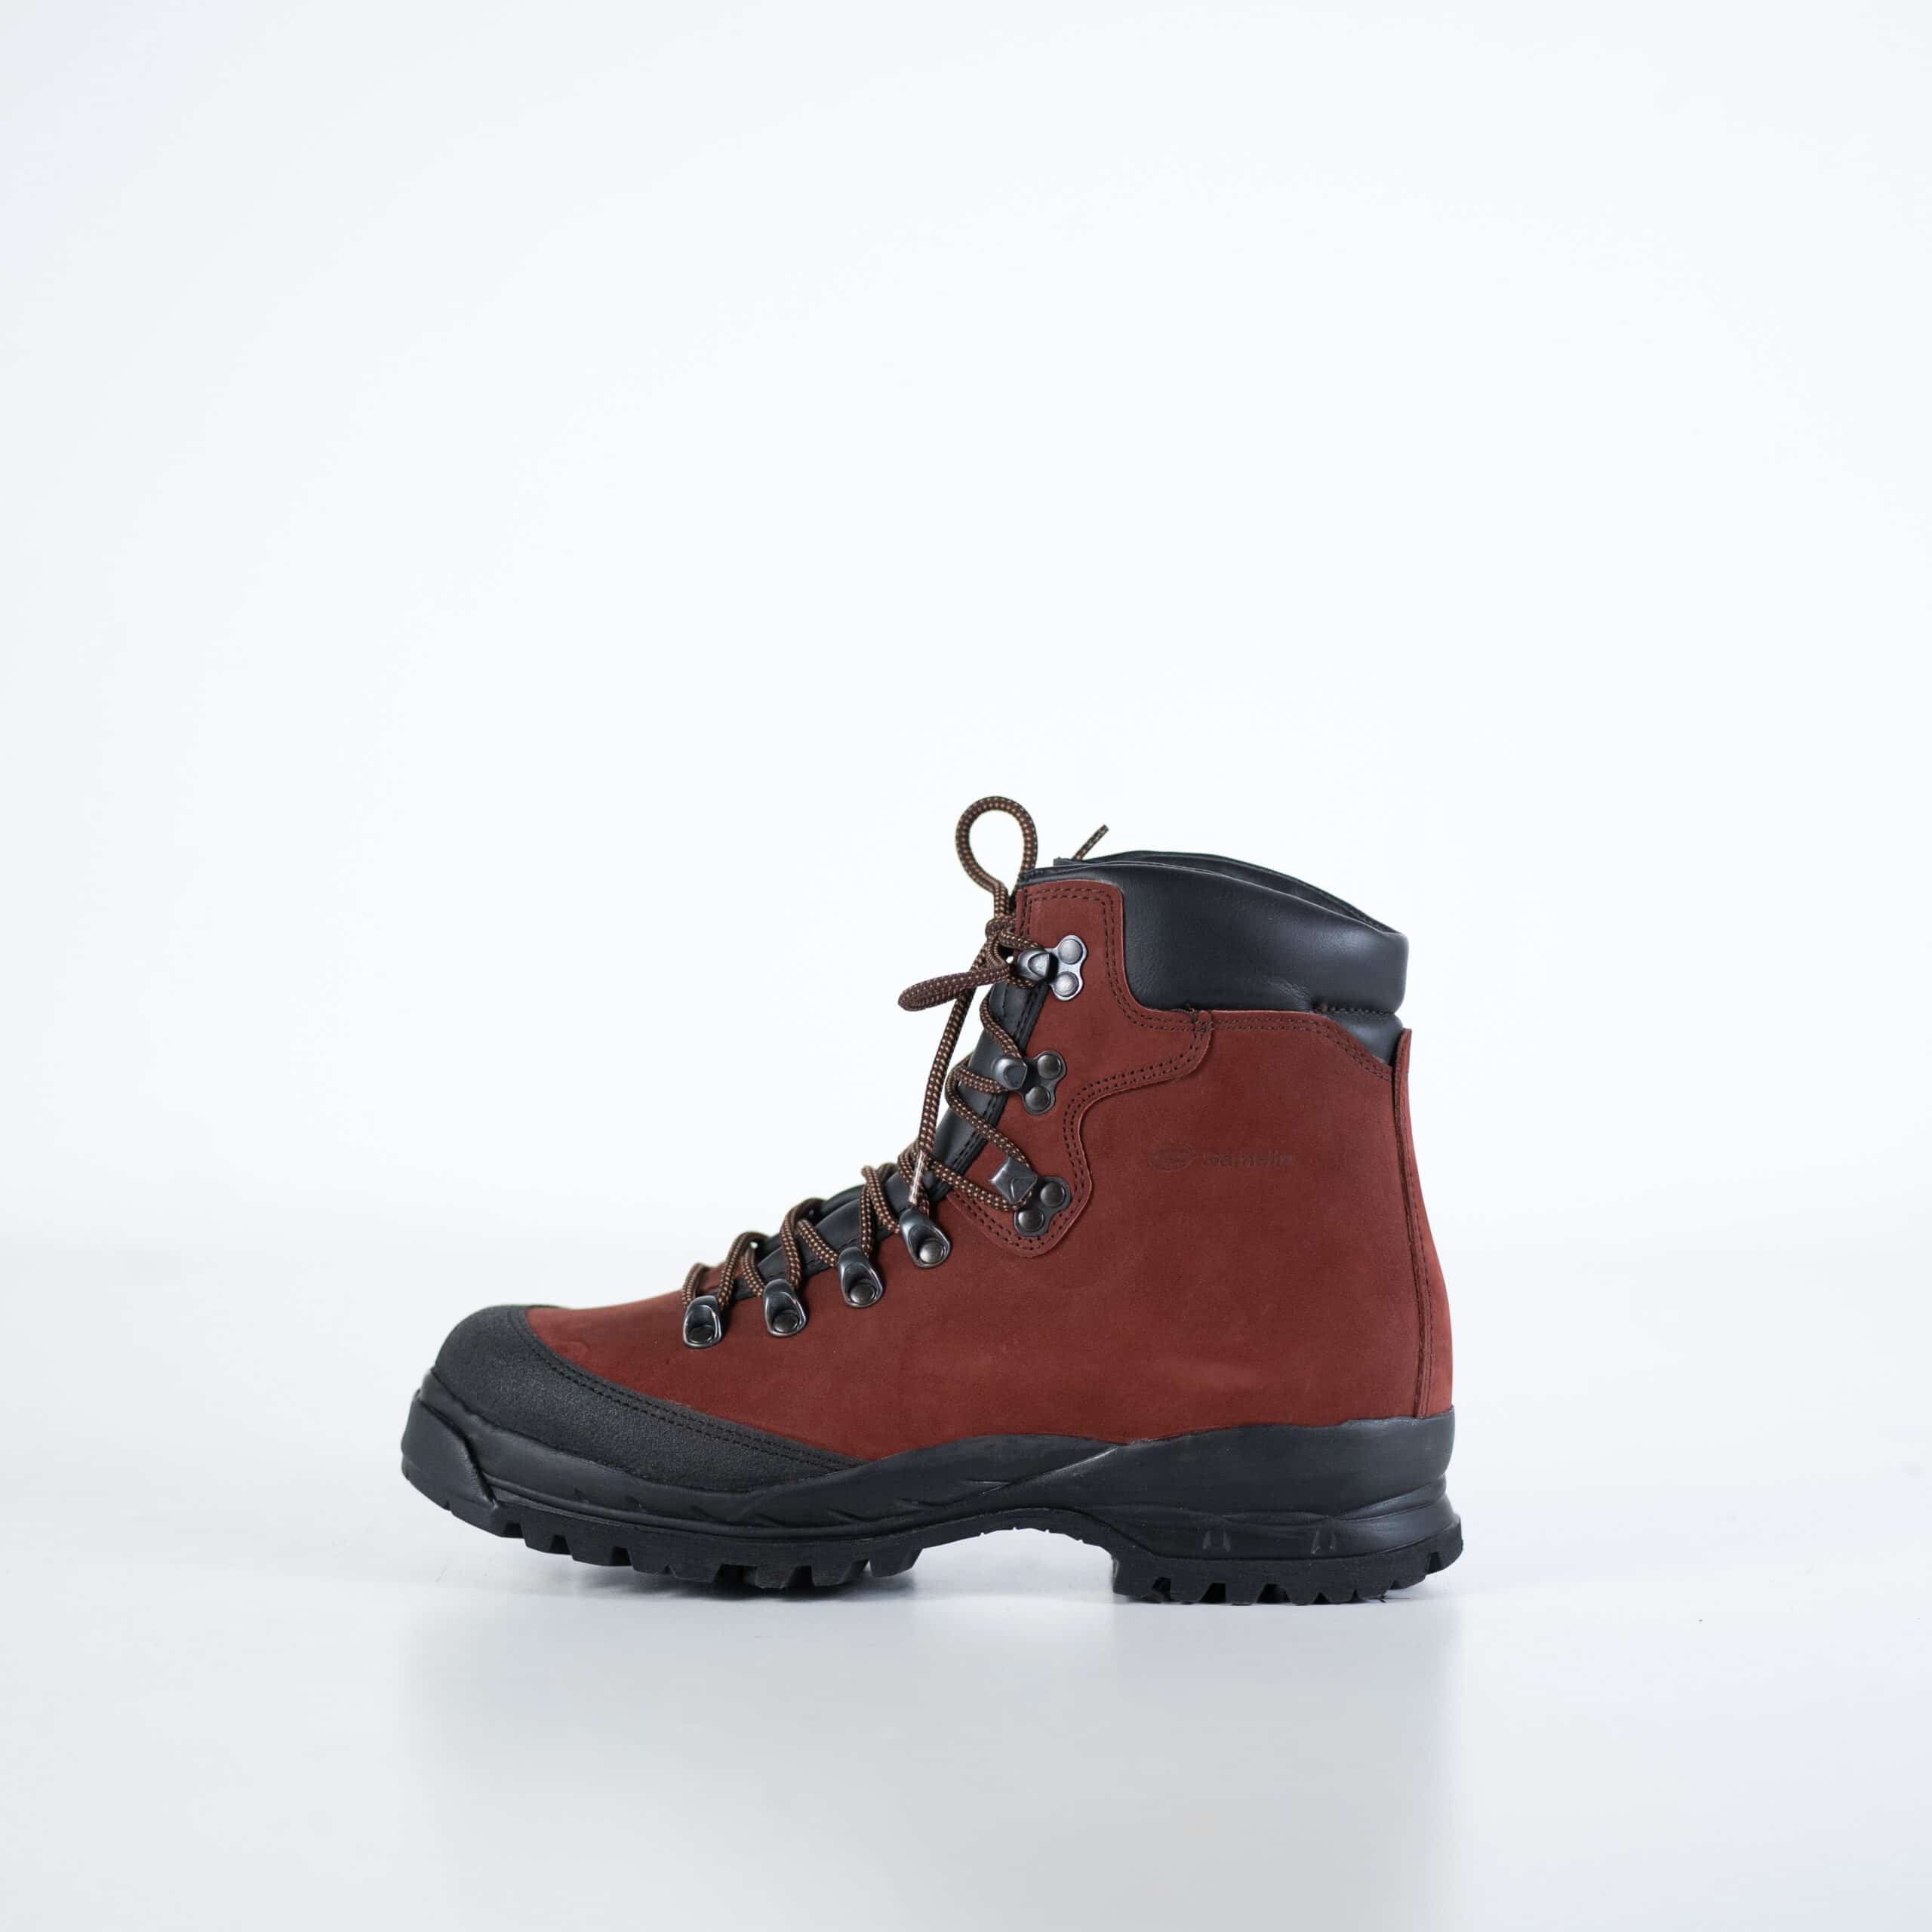 553P Rosso Aragosta Hiking Boots Vaelluskengät